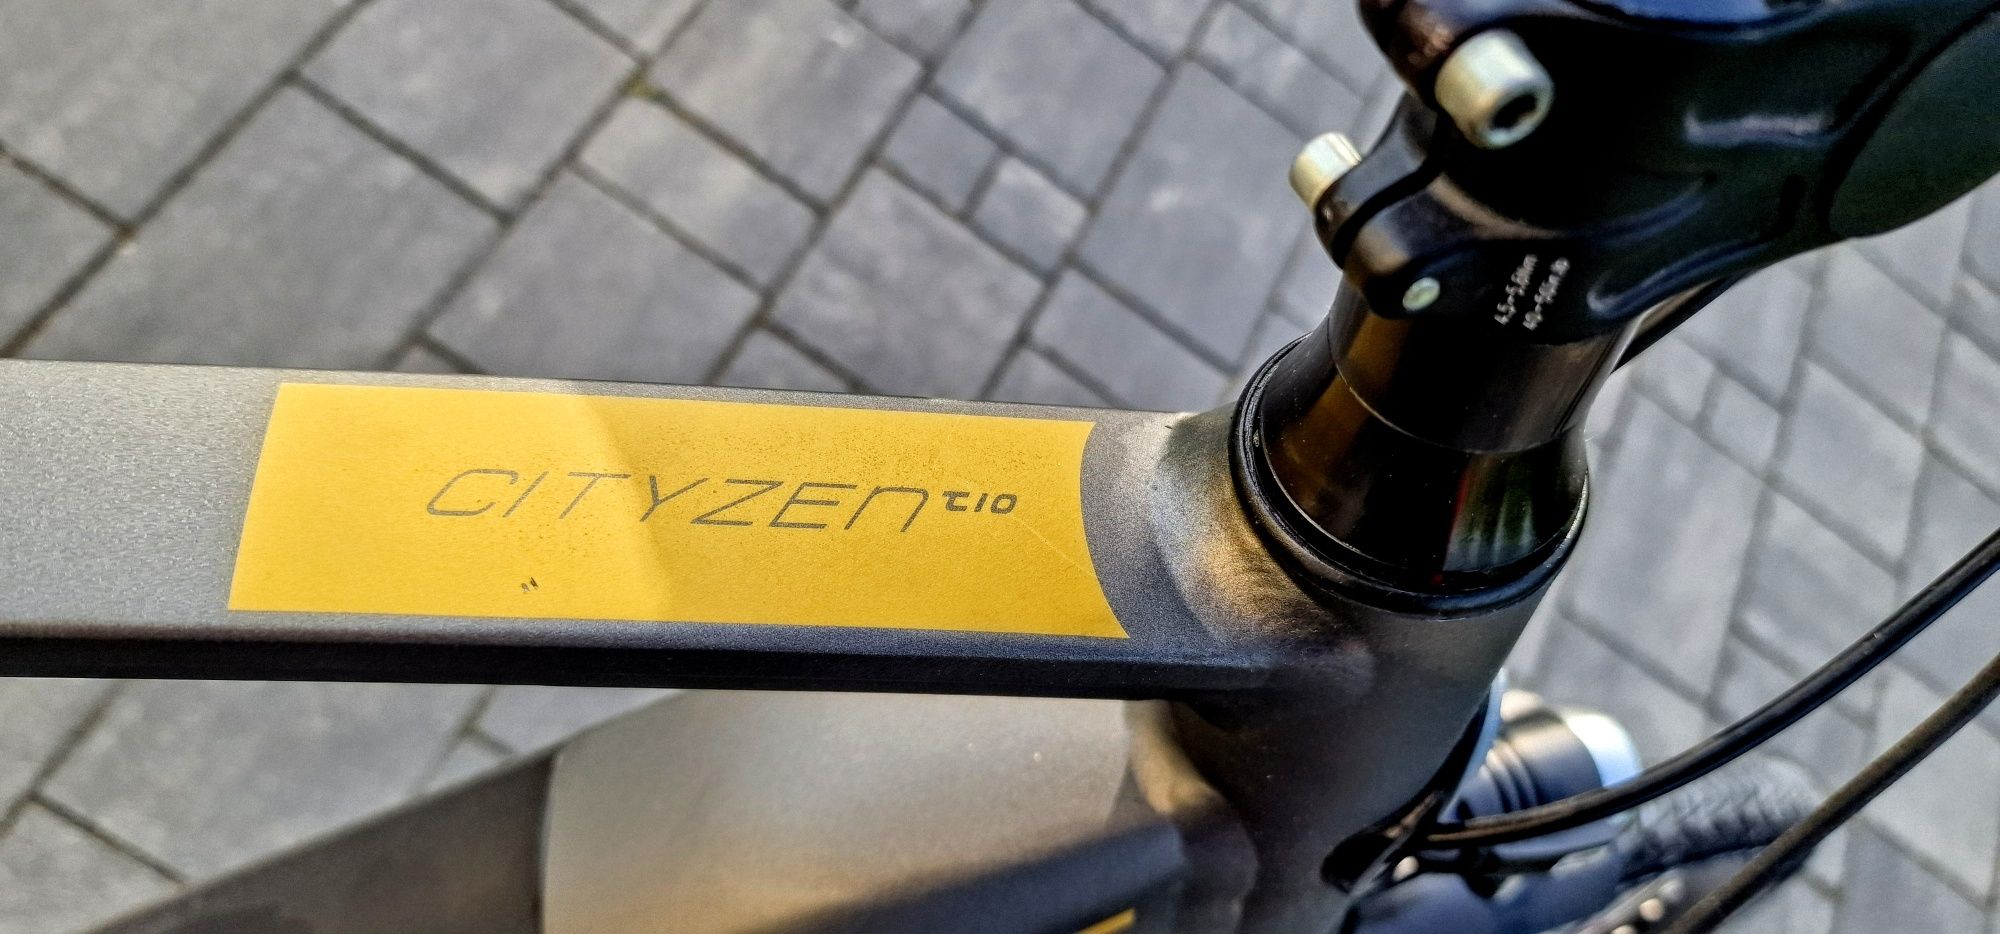 Gazelle CityZen T10 Bosh Performance Line na Kalkhoff Integrale rower